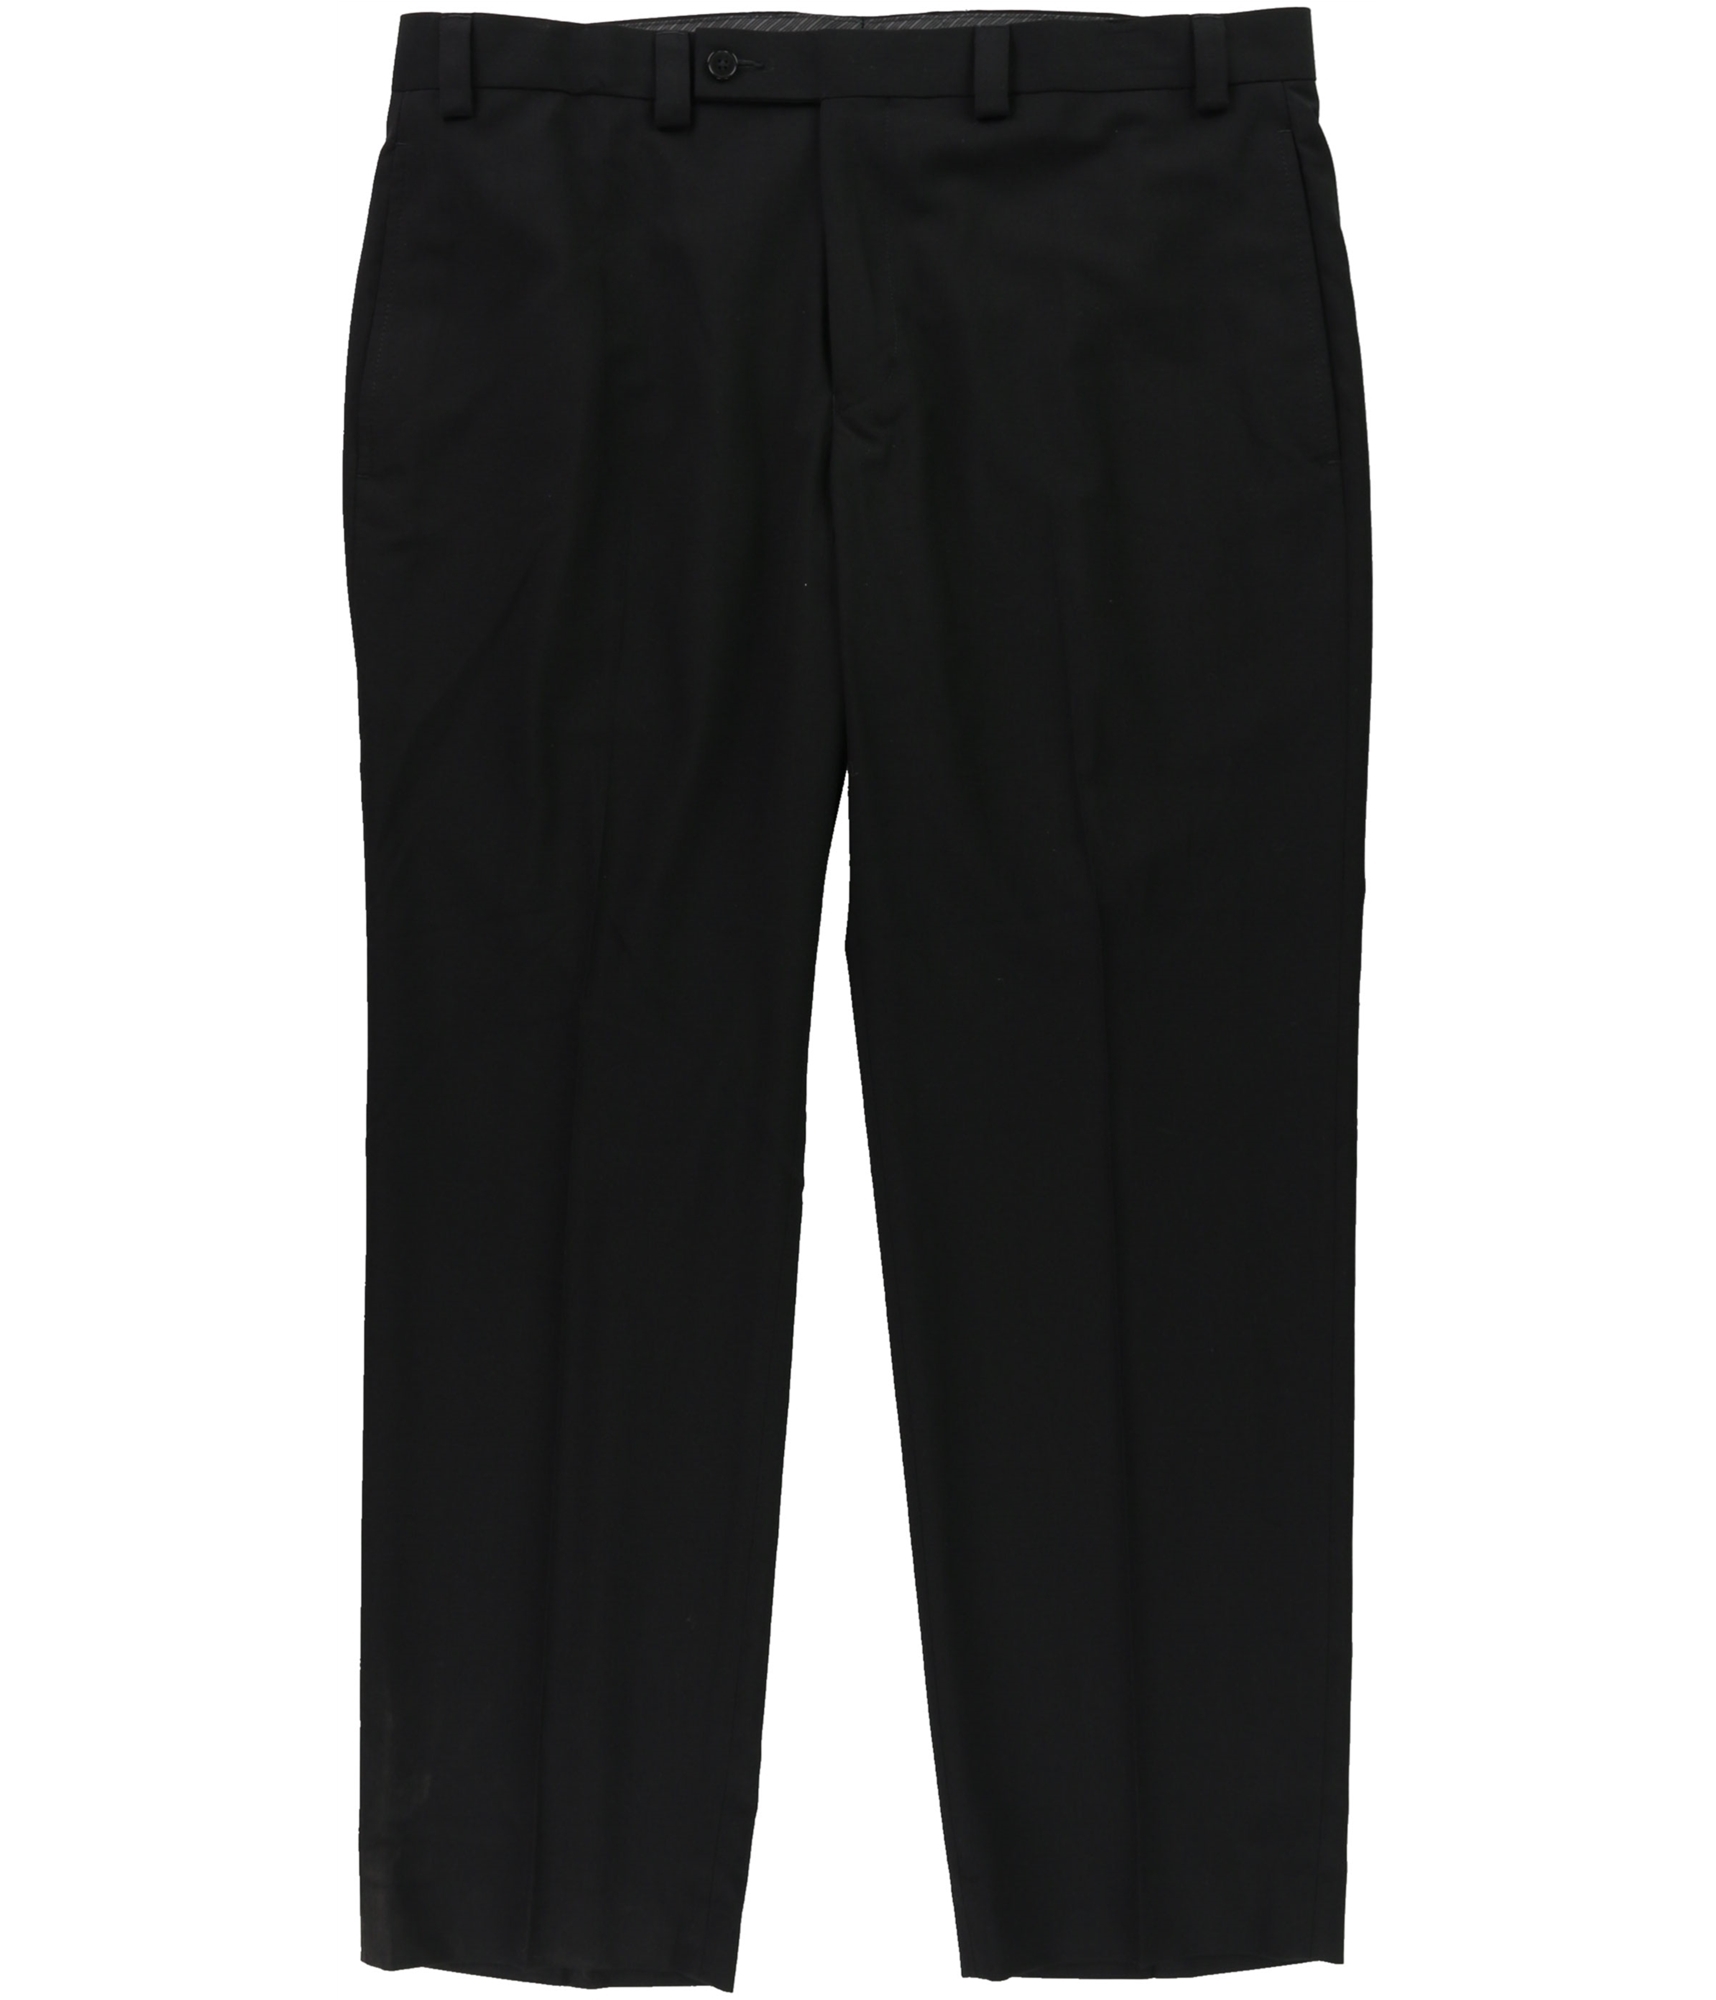 Buy a Mens Calvin Klein Classic Dress Pants Slacks Online 